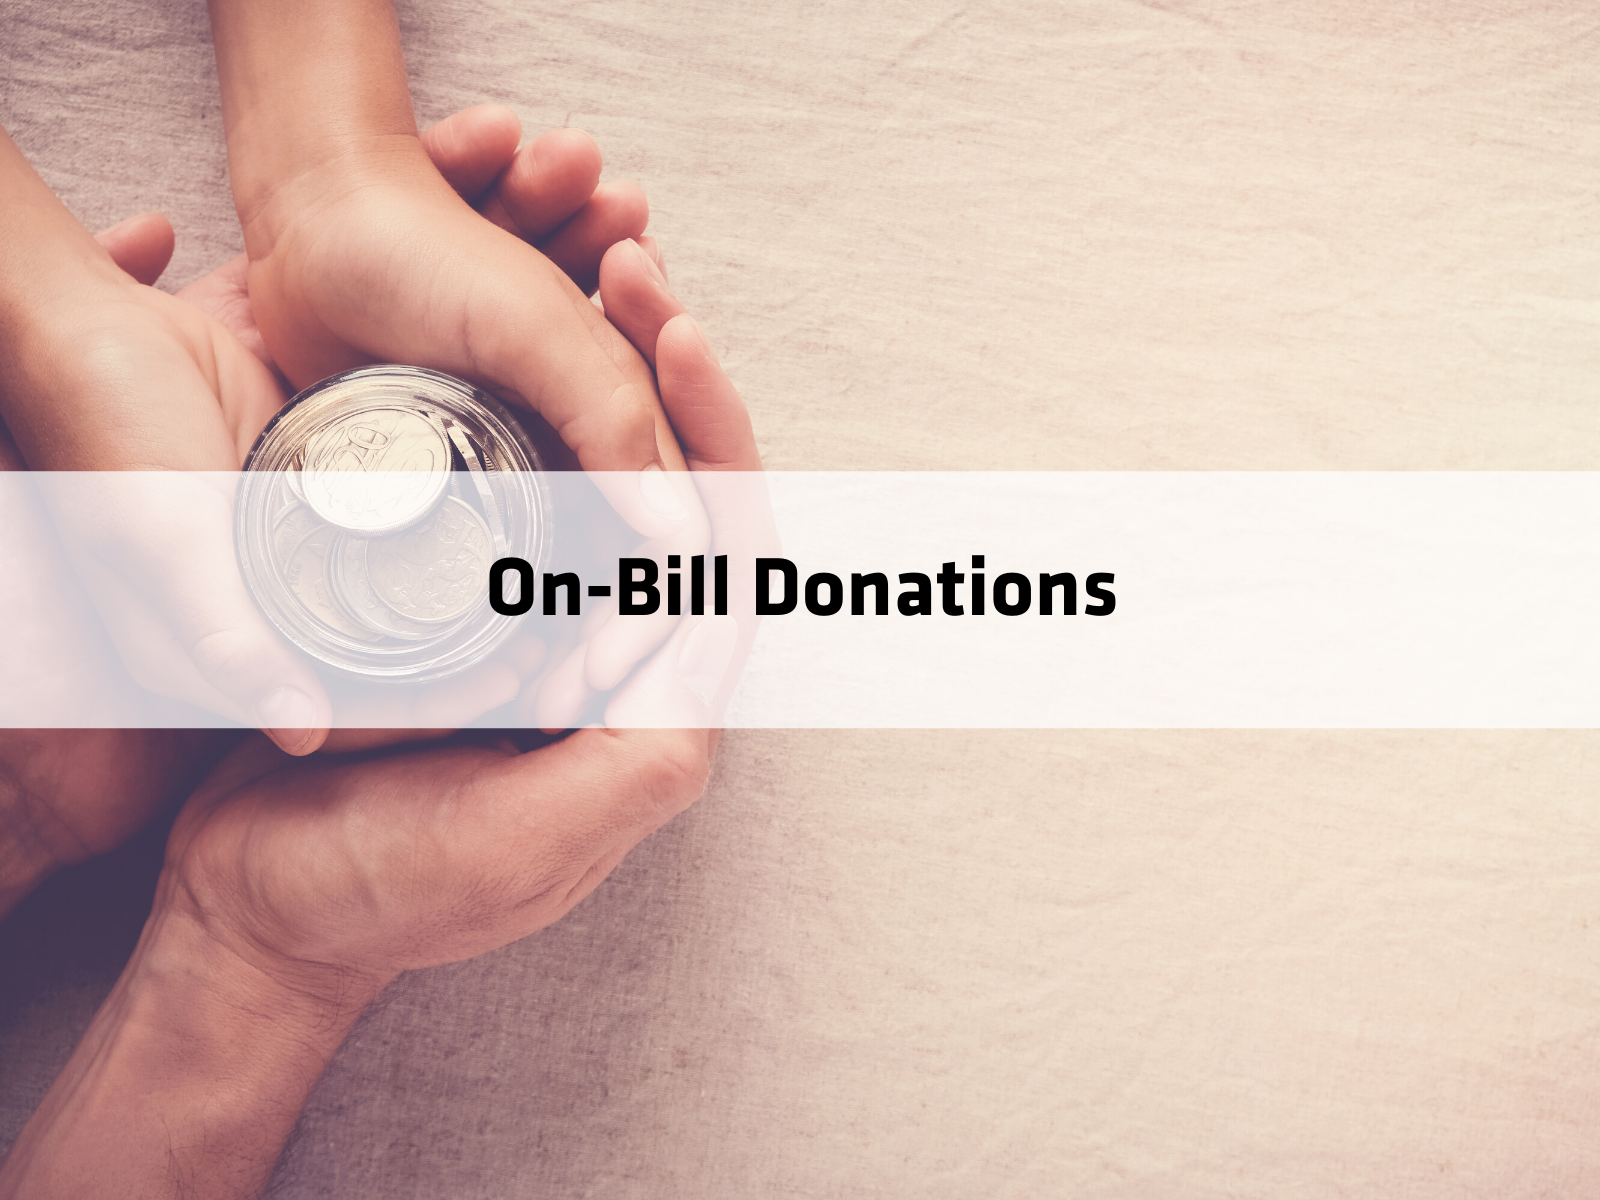 On-Bill Donations